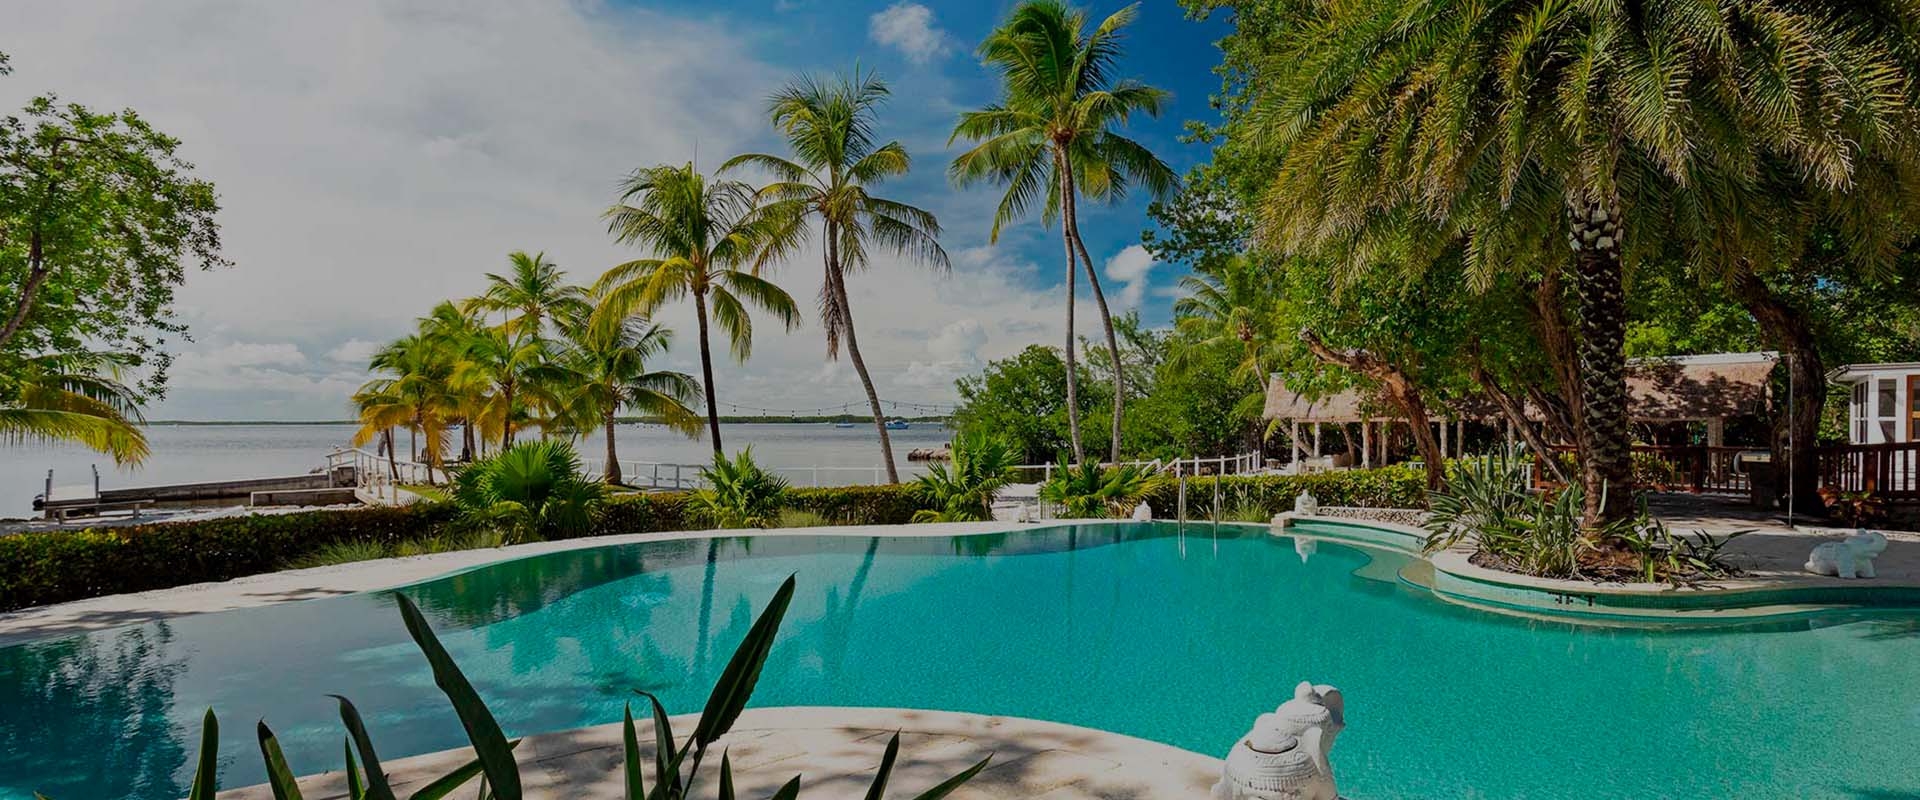 Private Resort Hotel in Key Largo, FL